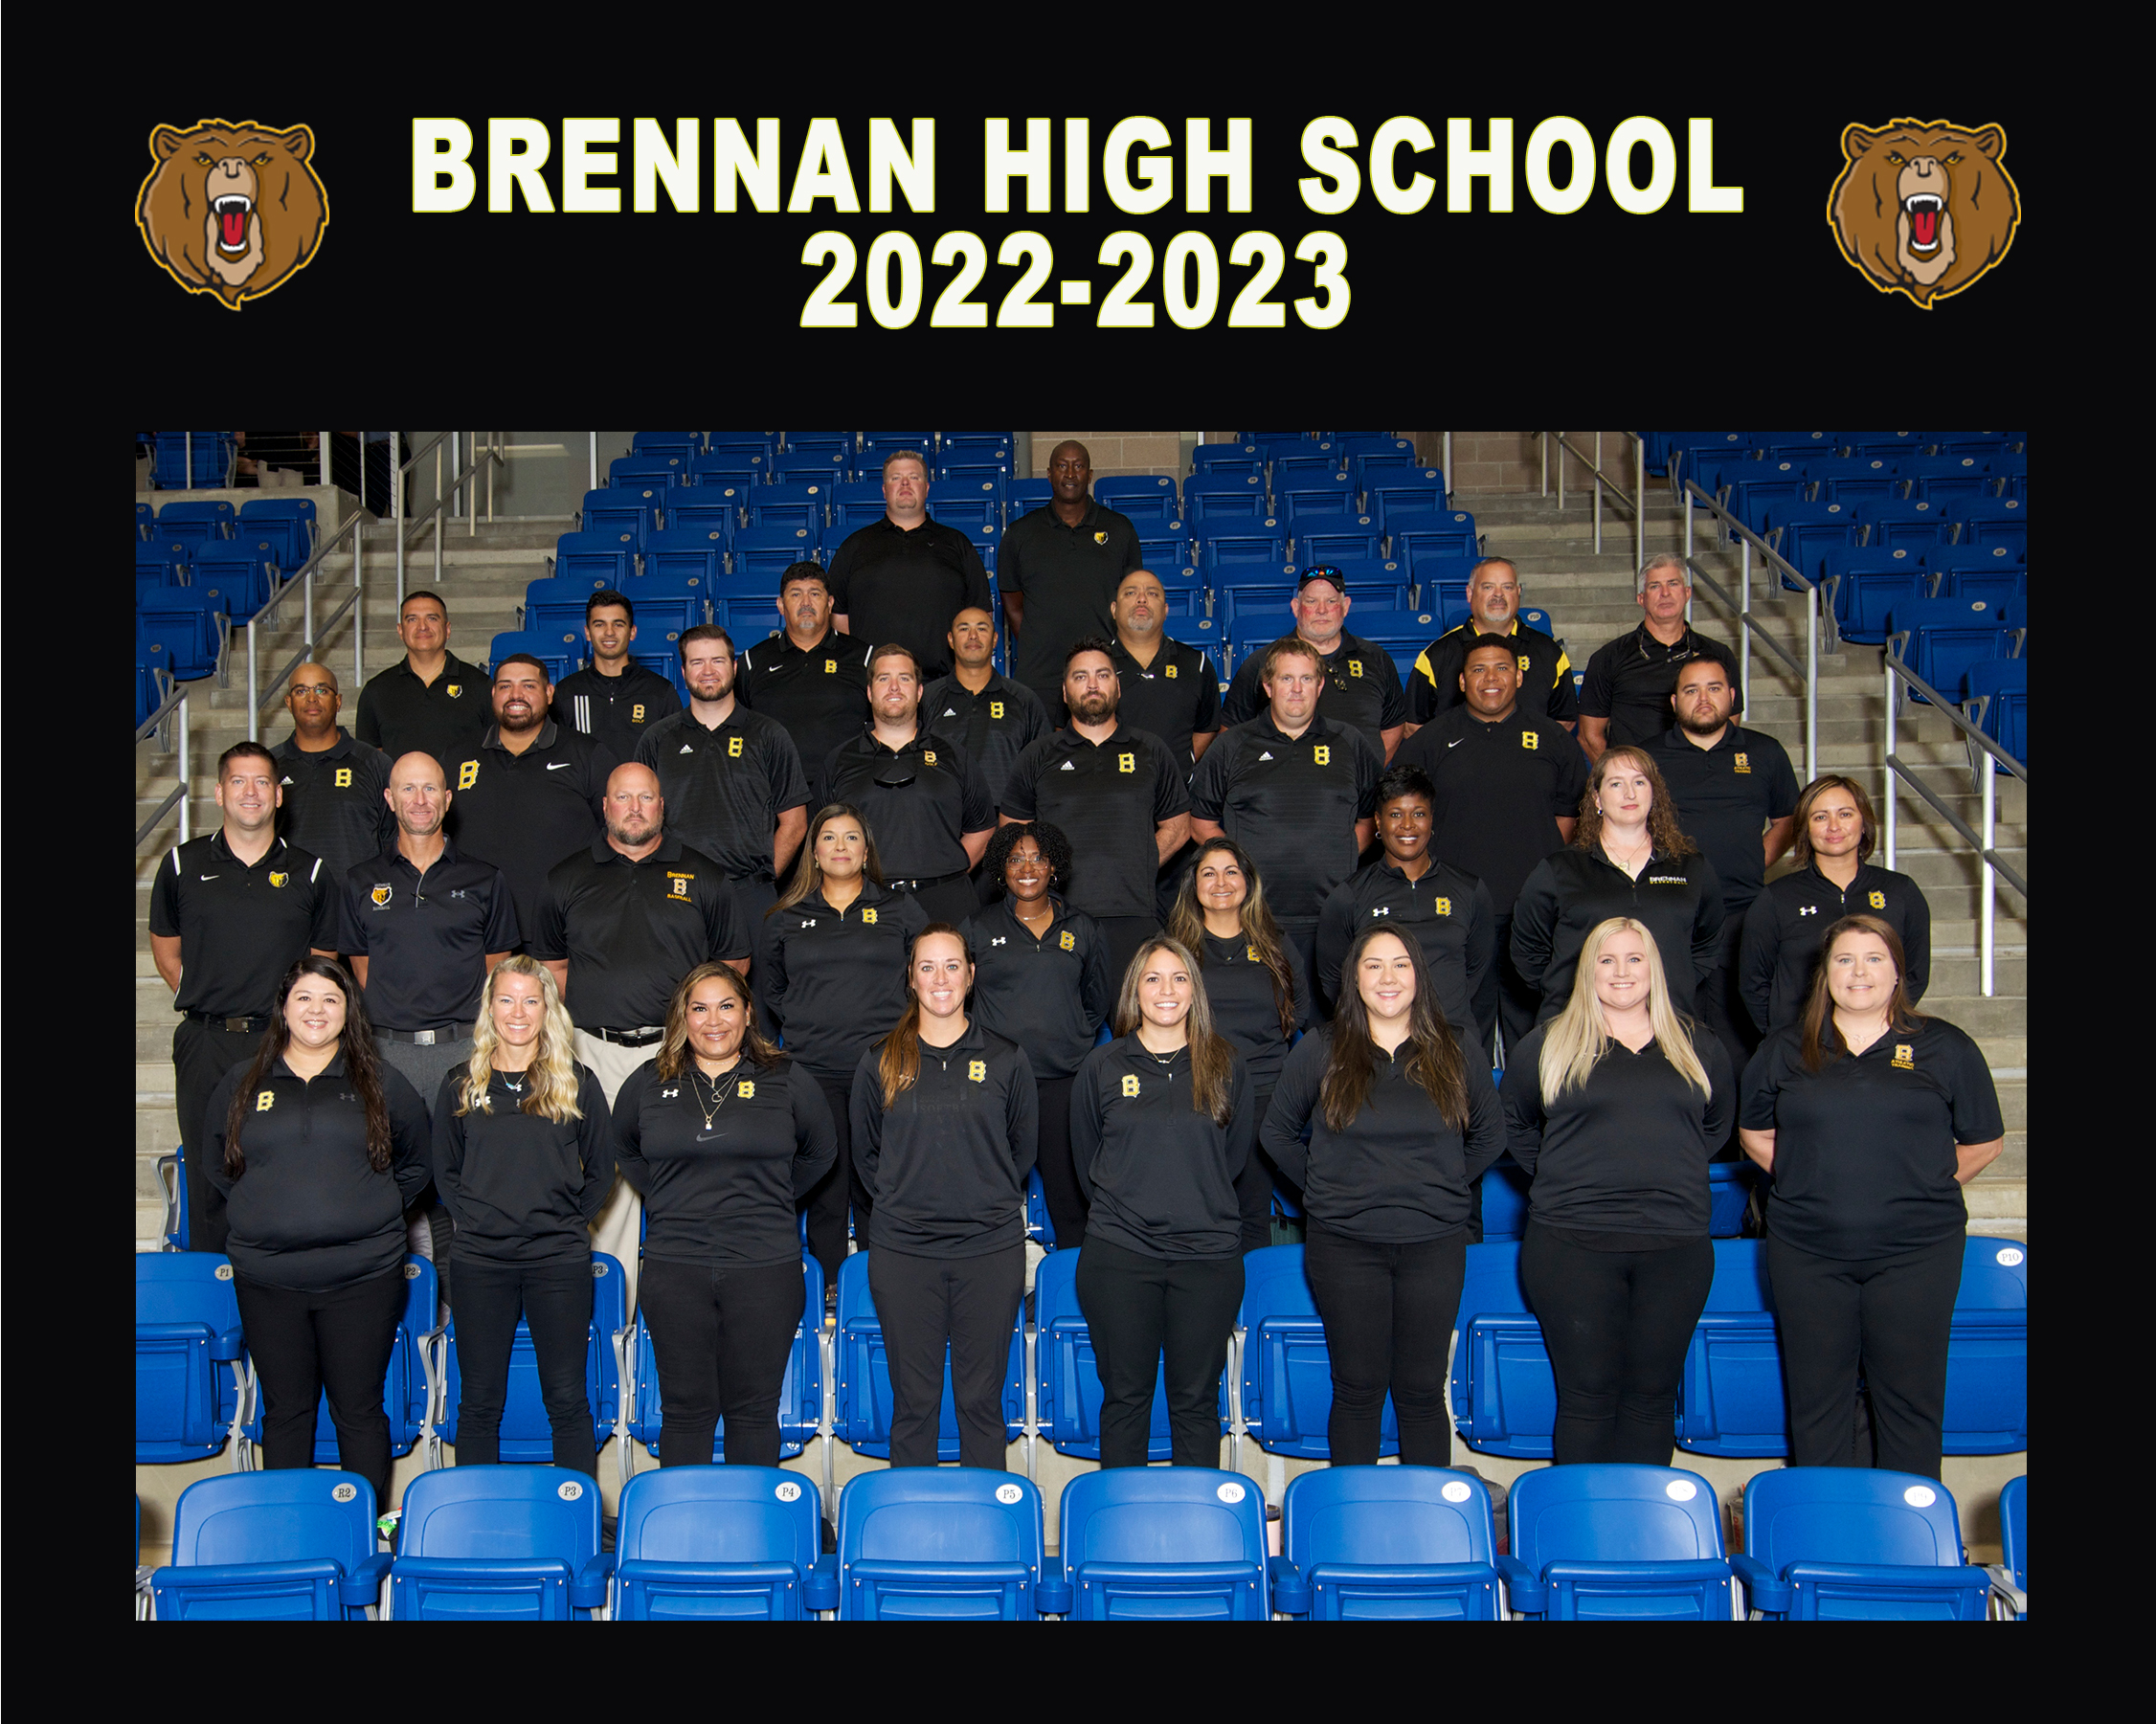 Brennan Coaching Staff